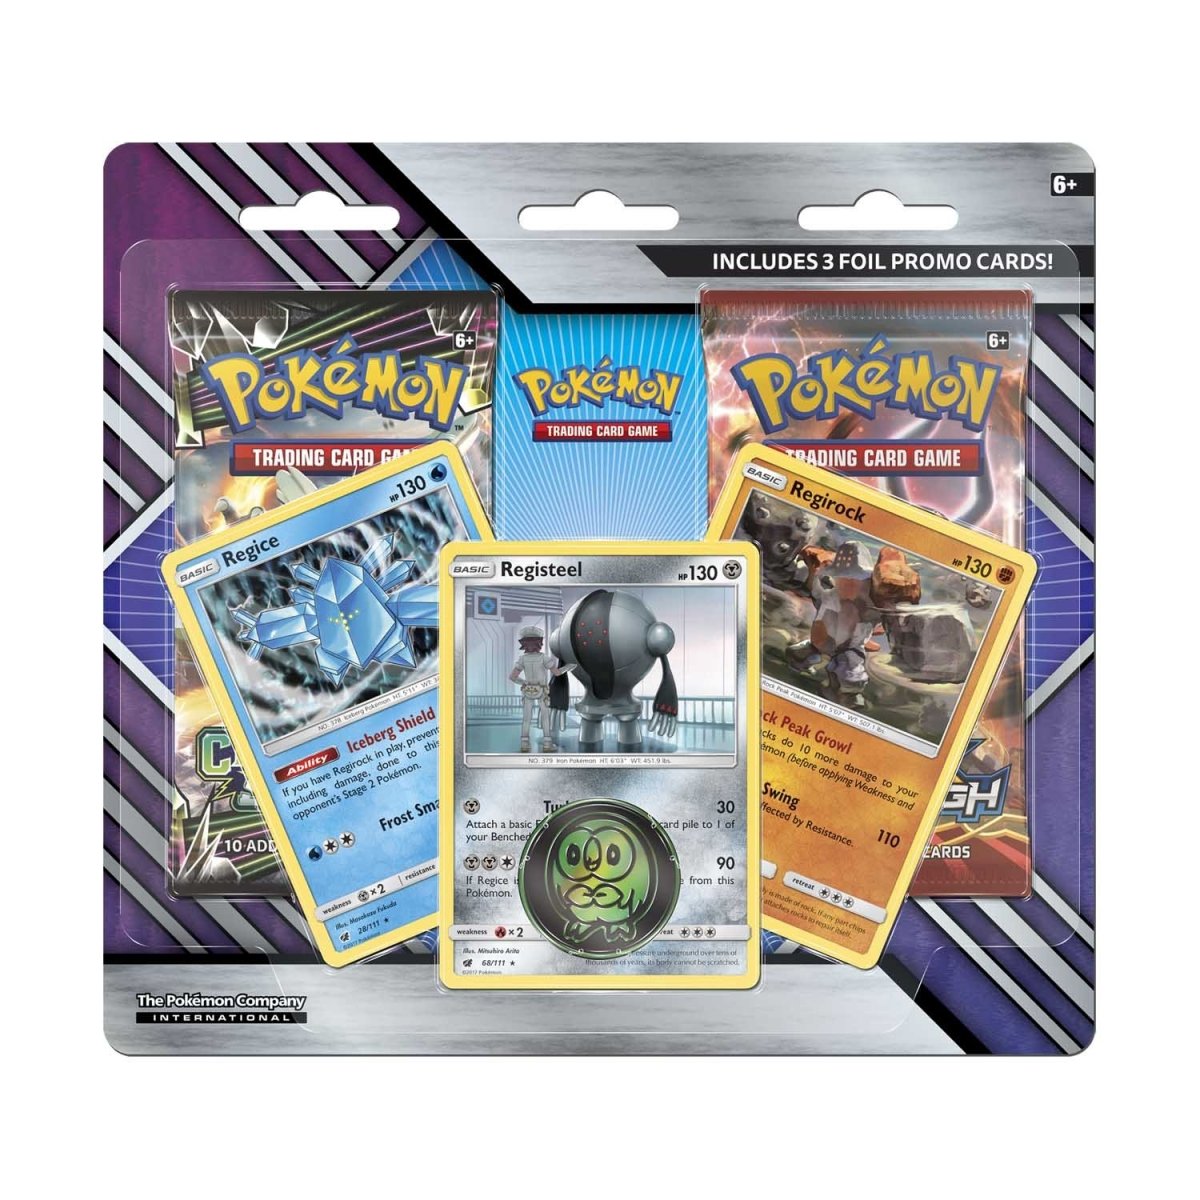 Regirock, Regice & Registeel Pokémon Pins (3-Pack)